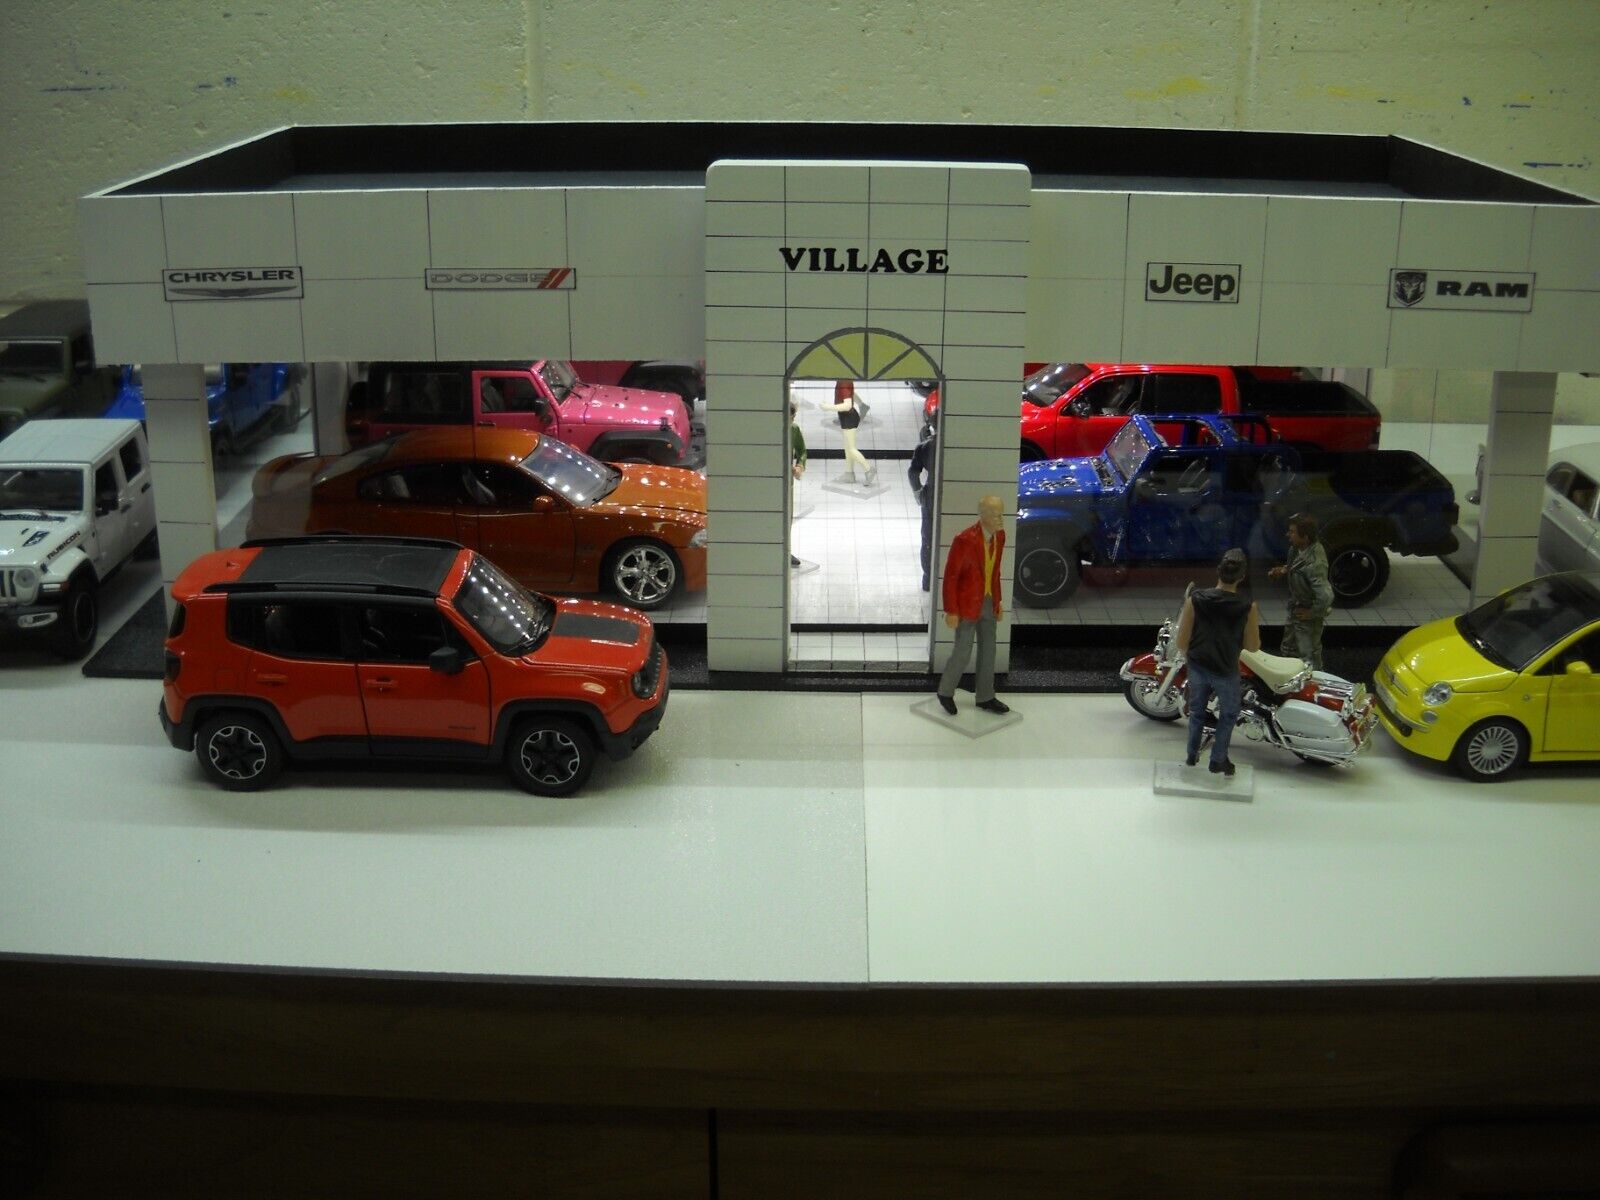 Chrysler Dodge Jeep Ram modern dealership 1/25 1/24th scale model car diorama